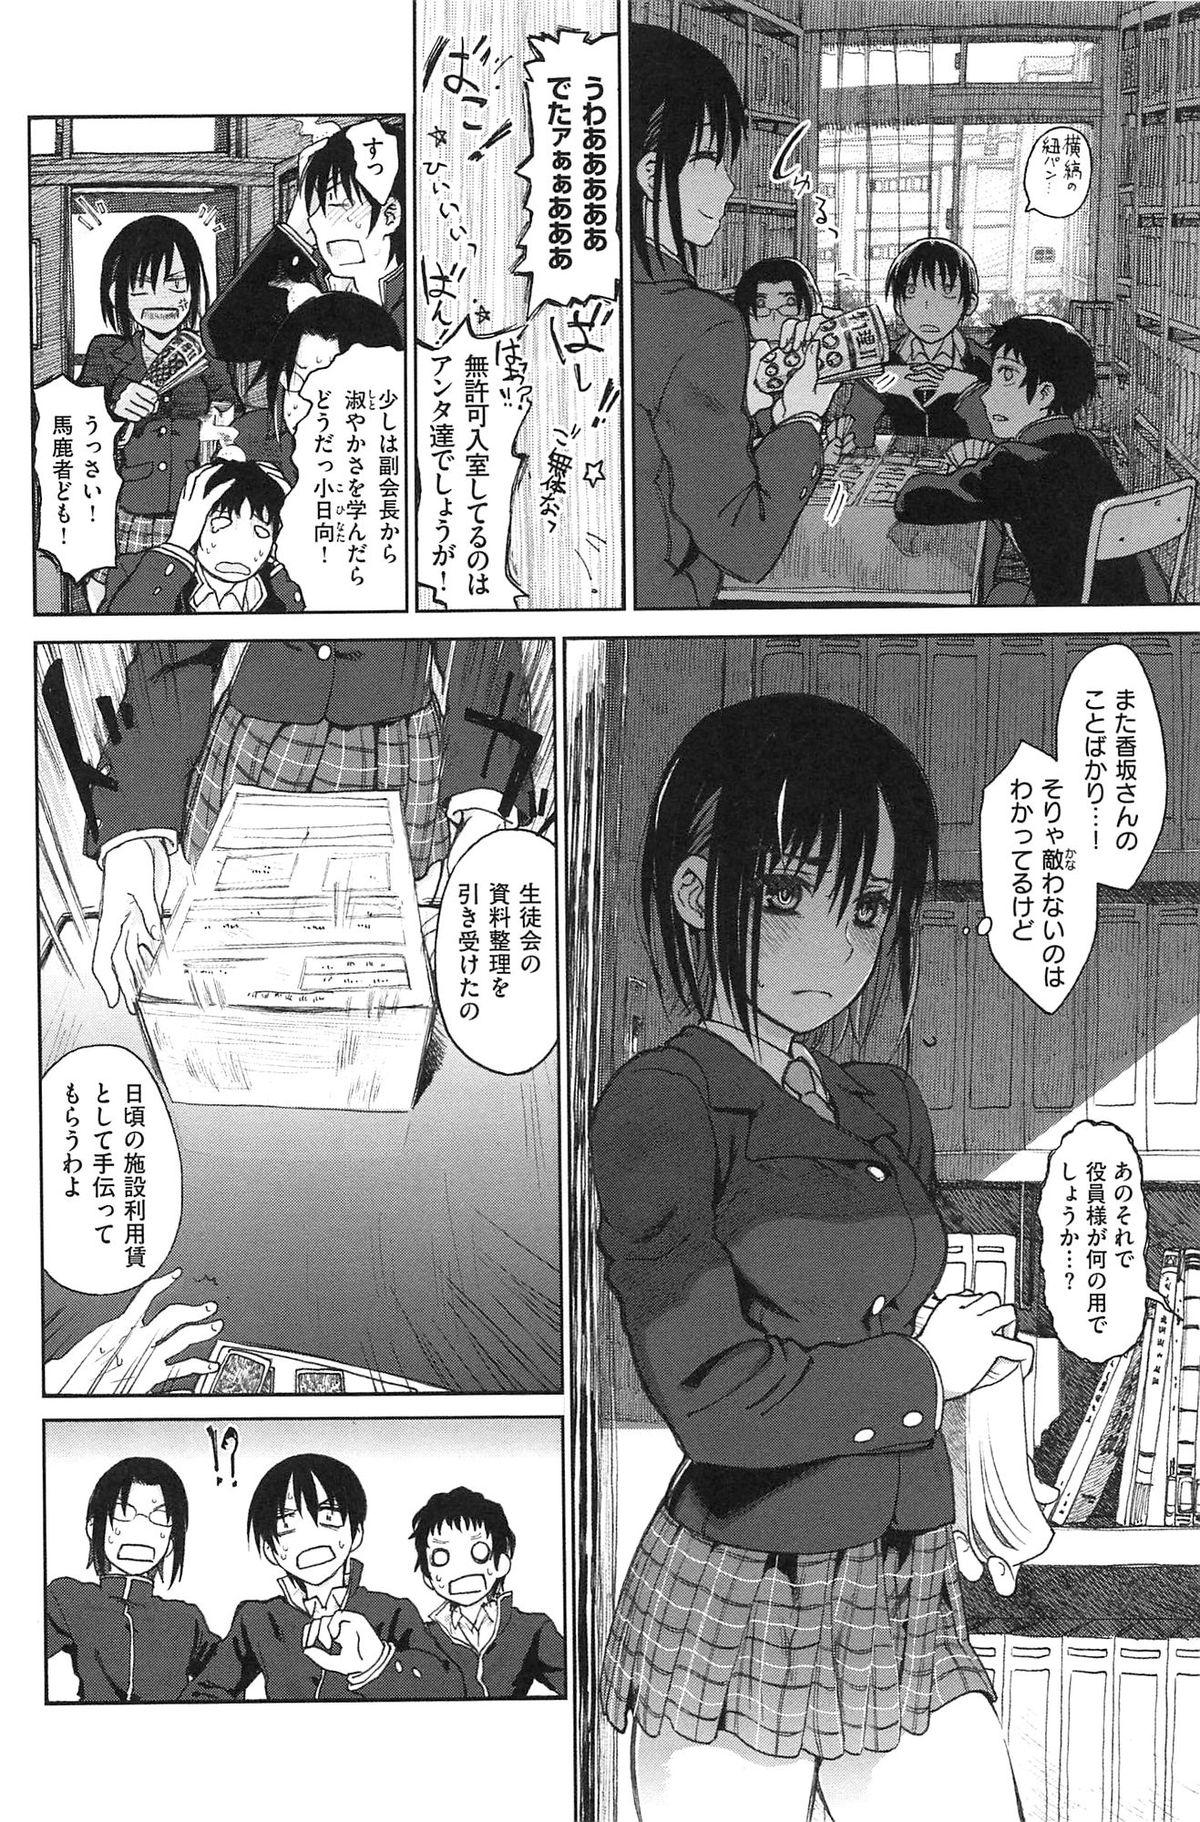 [Dagashi] Junketsu no Owaru Hibi (Beautiful Days of Losing Virginity) … (WANI MAGAZINE COMICS SPECIAL) 104